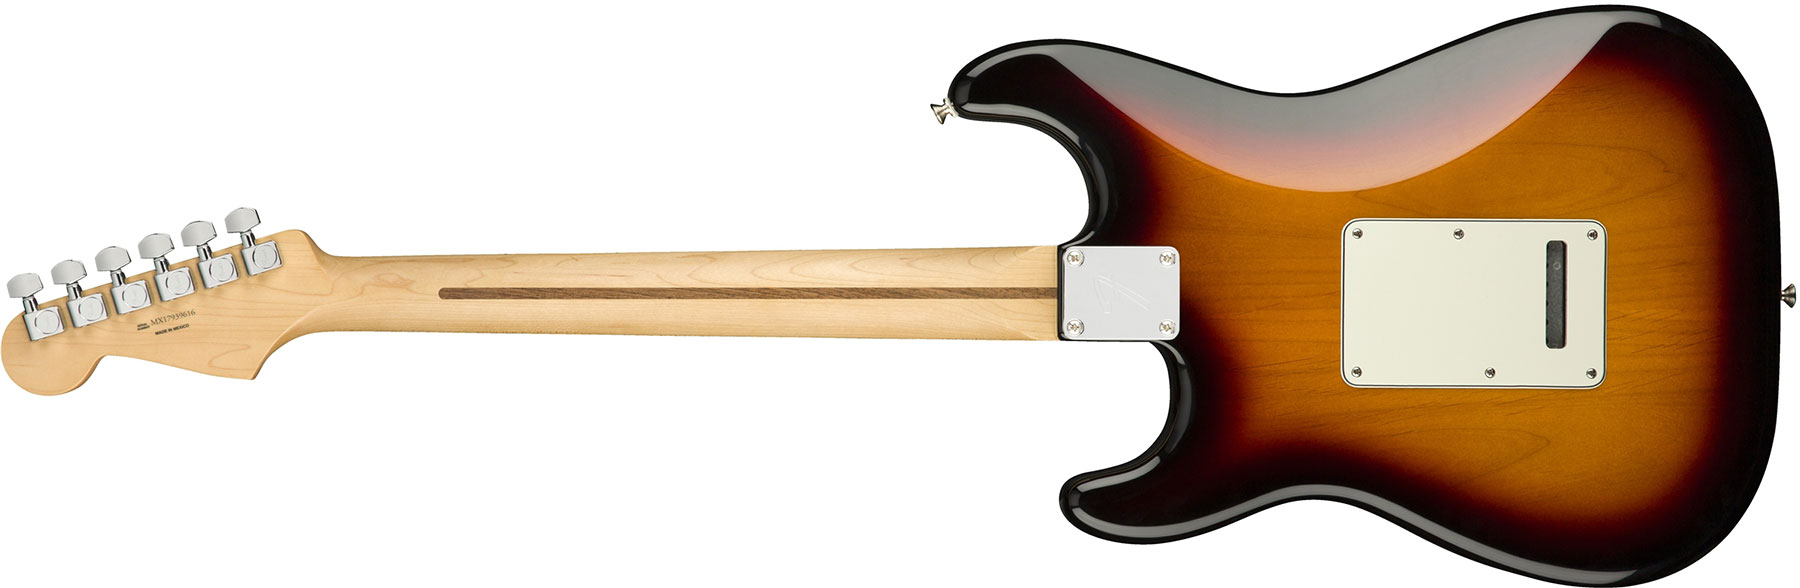 Fender Strat Player Mex Hss Mn - 3-color Sunburst - Guitarra eléctrica con forma de str. - Variation 1